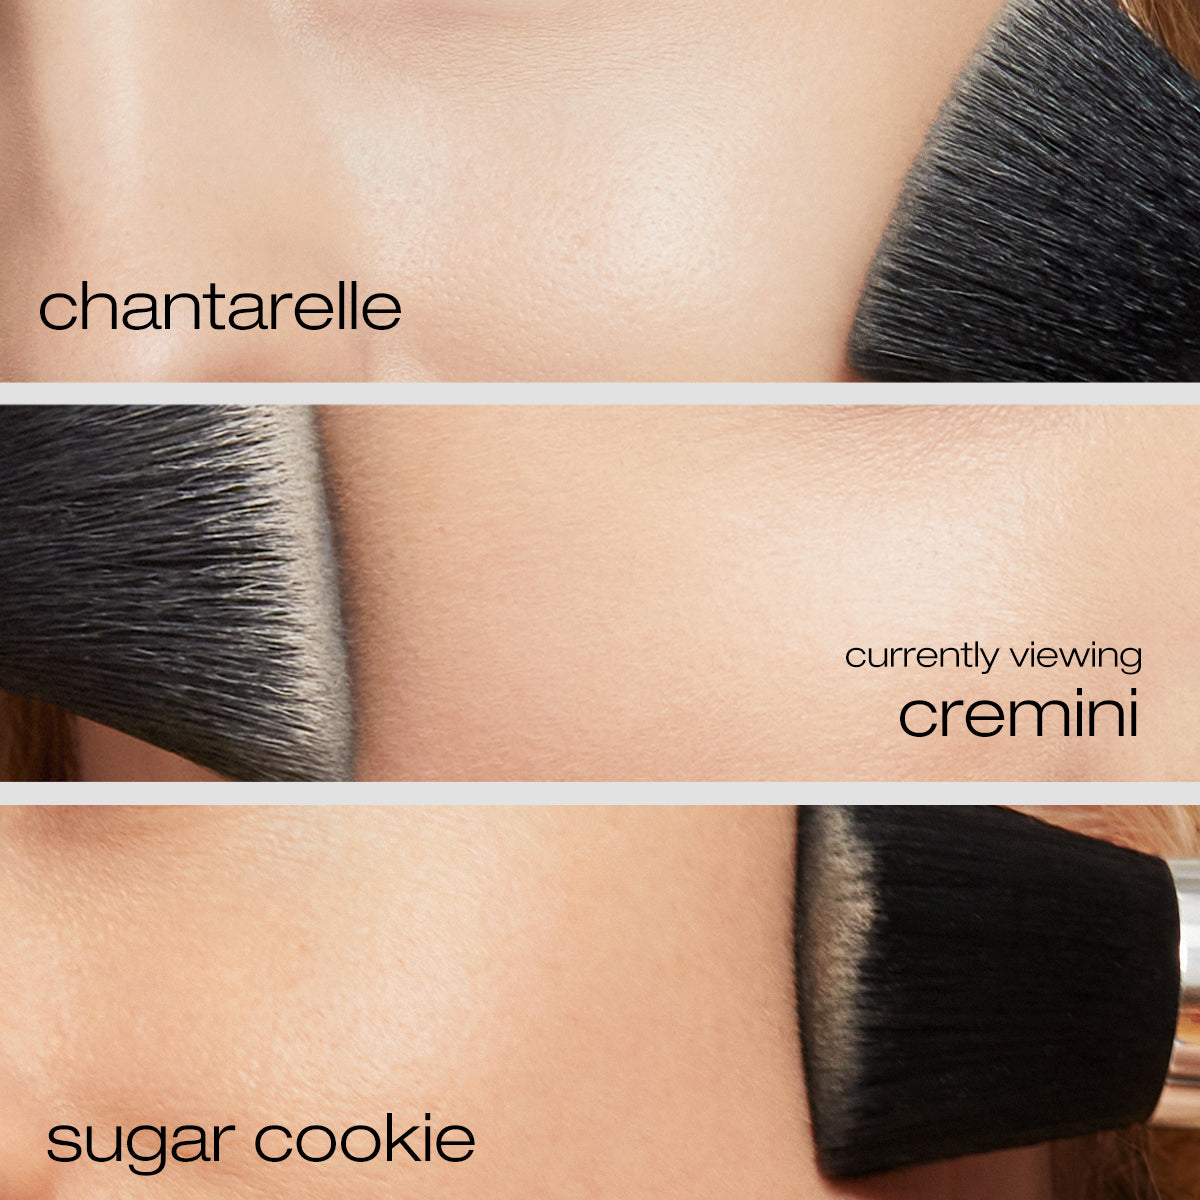 Model applying chantarelle, cremini, and sugar cookie foundation on cheeks